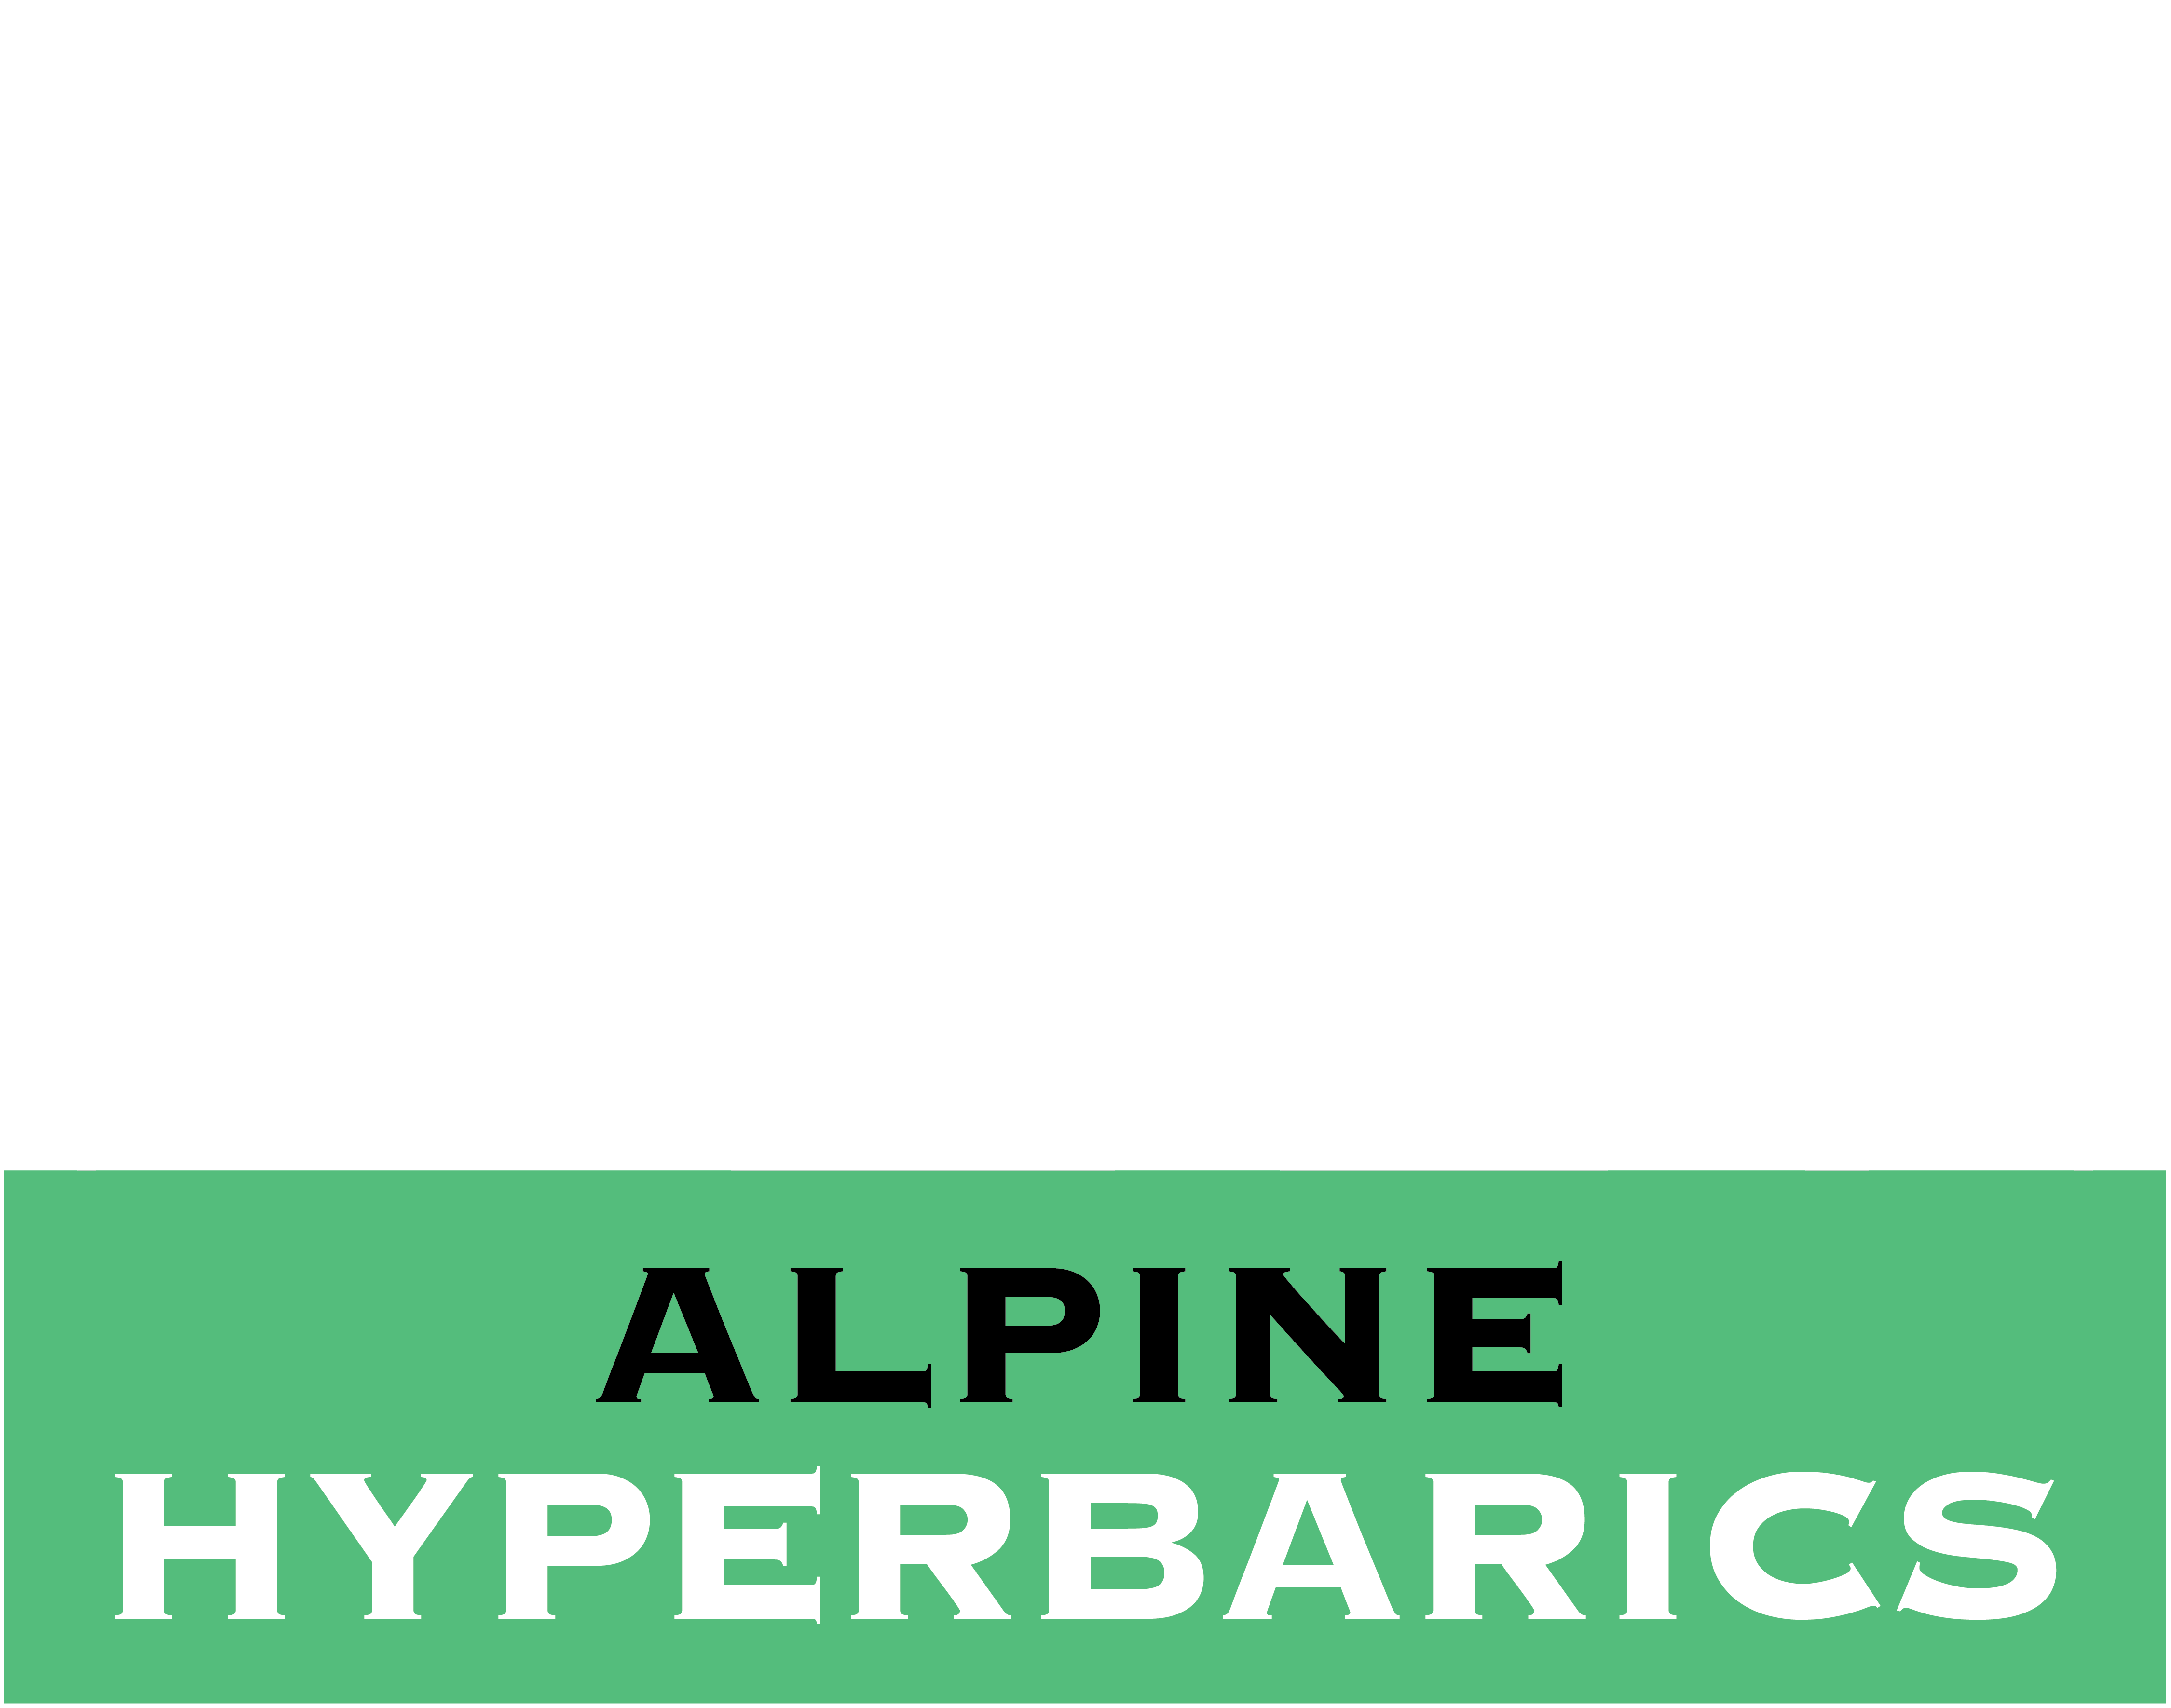 Alpine Hyperbarics logo white